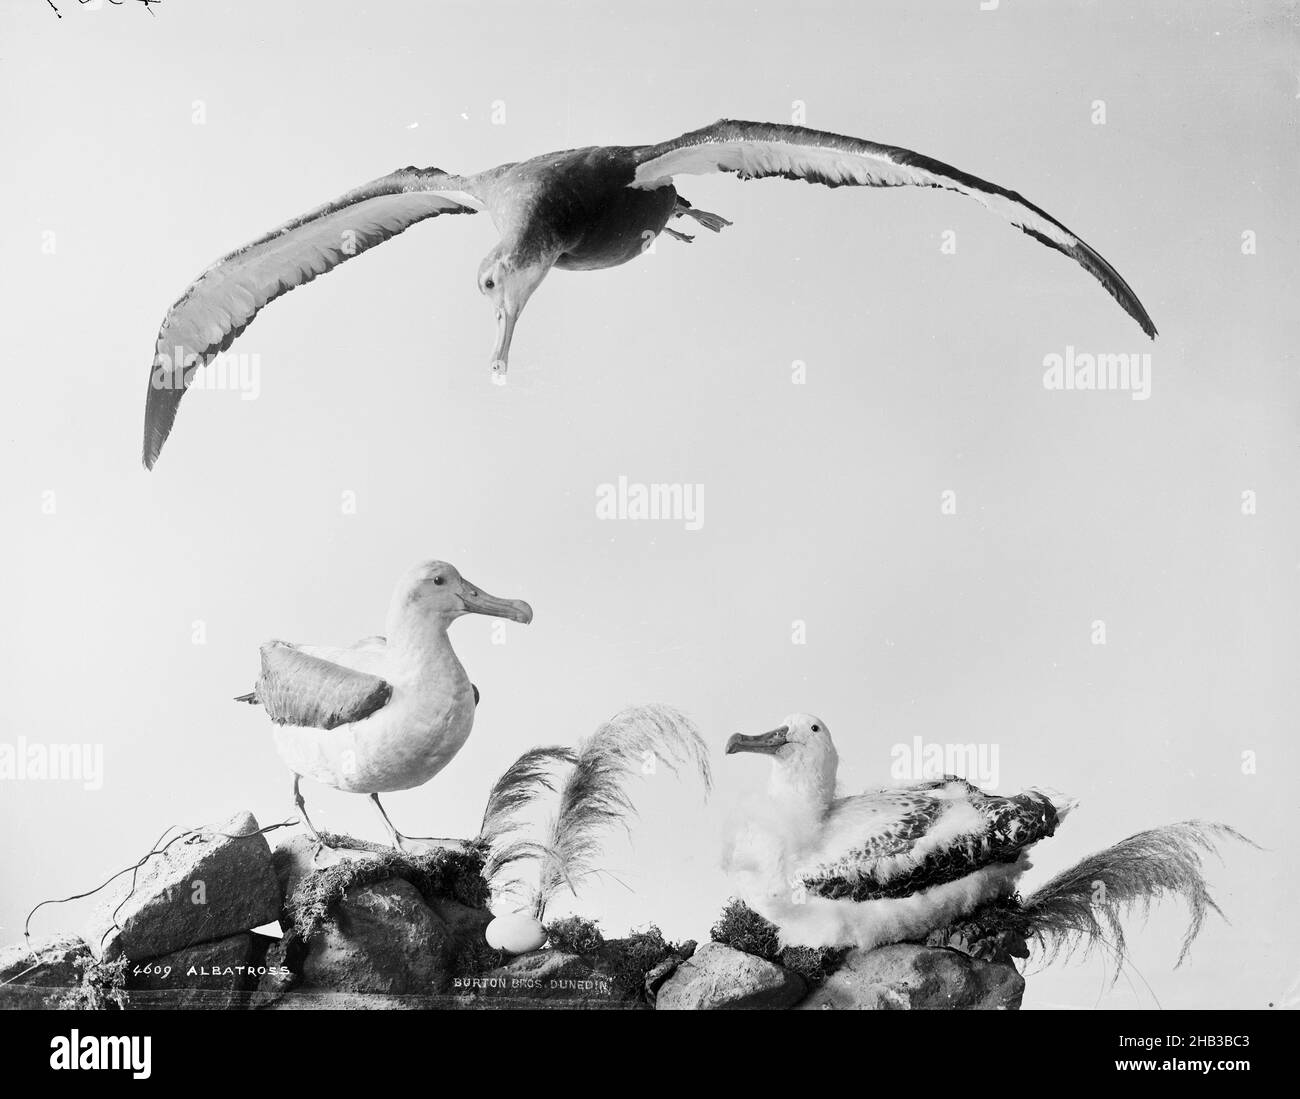 Albatross, Burton Brothers studio, photography studio, 1889, Dunedin, black-and-white photography, Display of stuffed birds Stock Photo